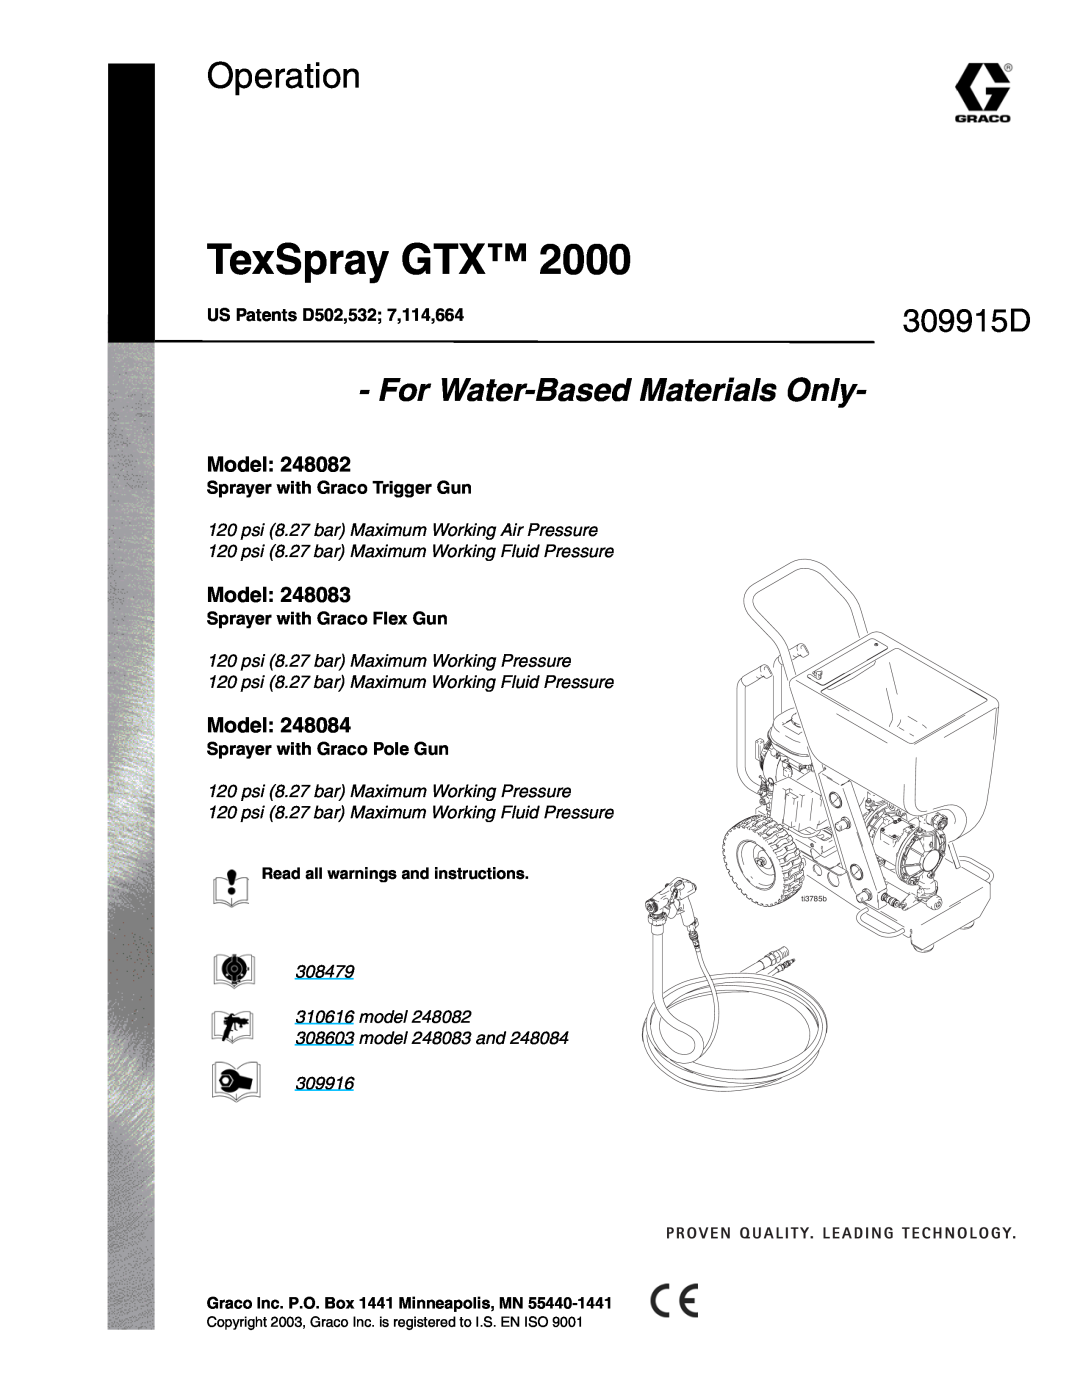 Graco Inc 248083 manual 309915D, Model, US Patents D502,532 7,114,664, Sprayer with Graco Trigger Gun, TexSpray GTX 